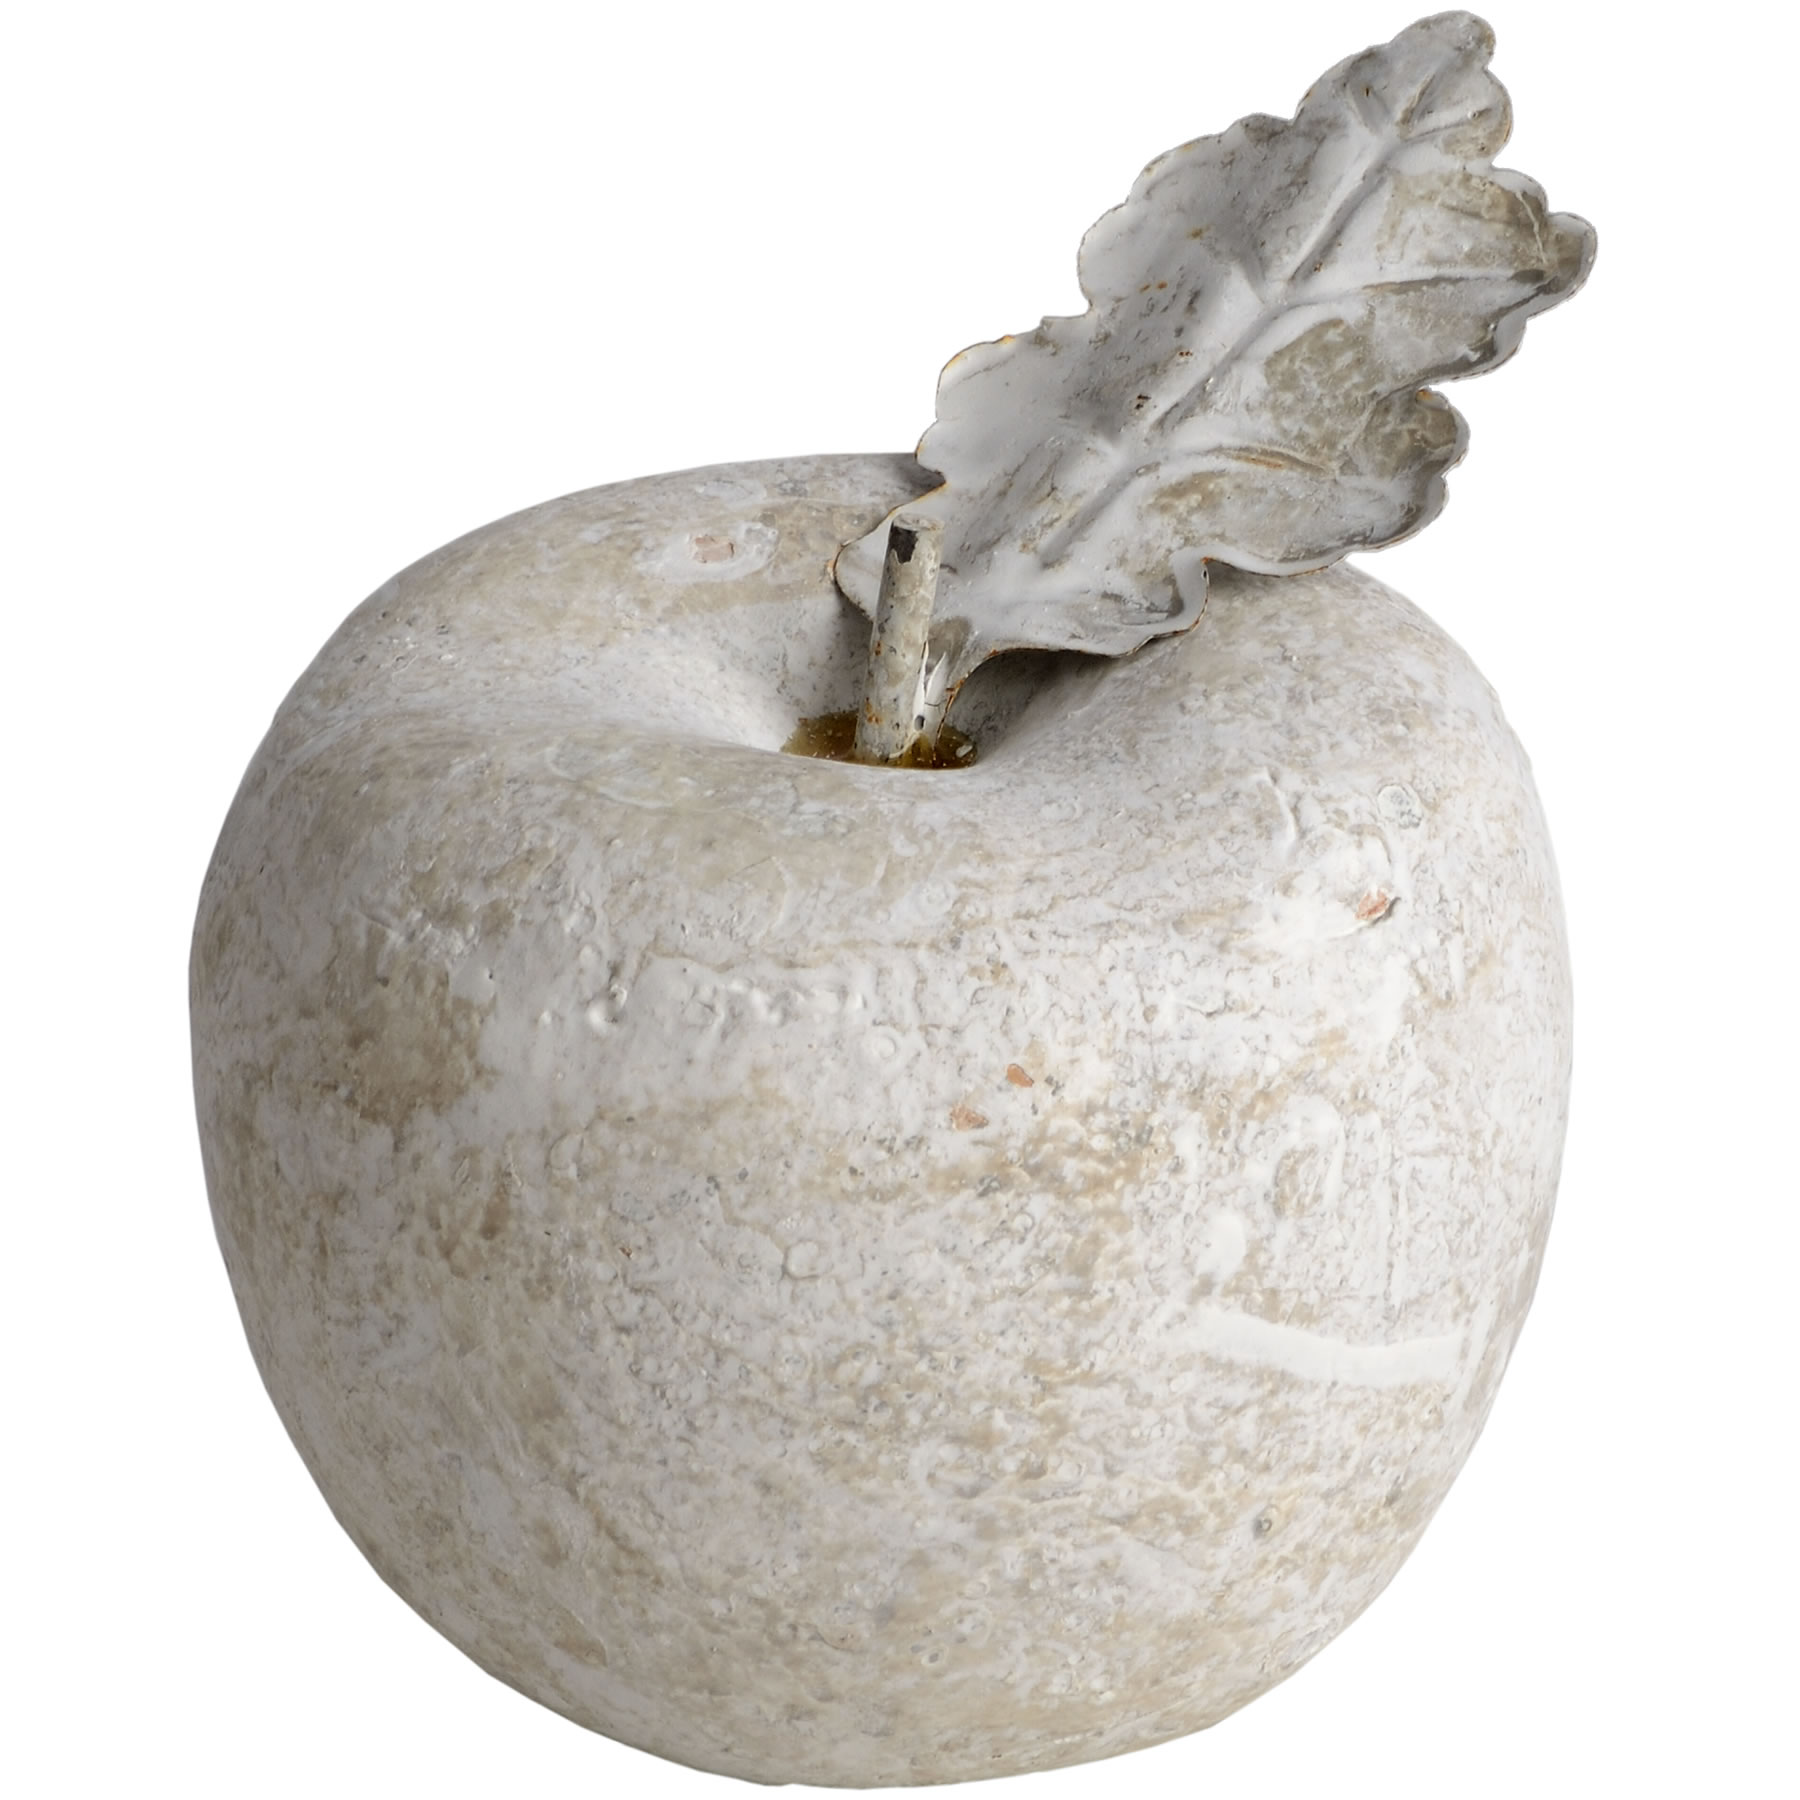 Stone Apple (Small) - Image 1